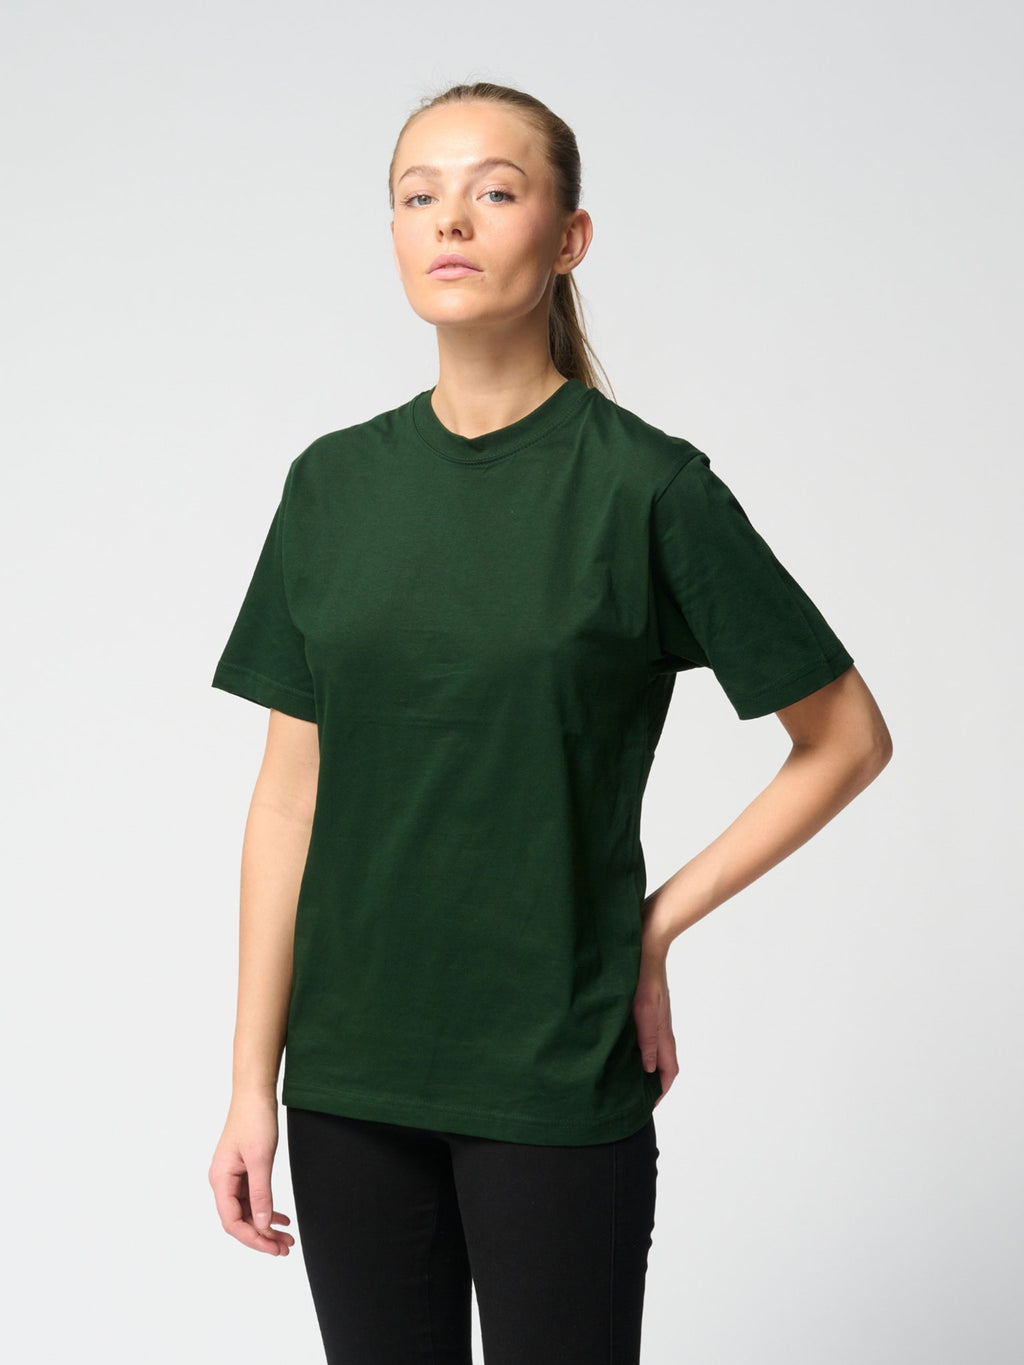 Camiseta de gran tamaño - Botella verde